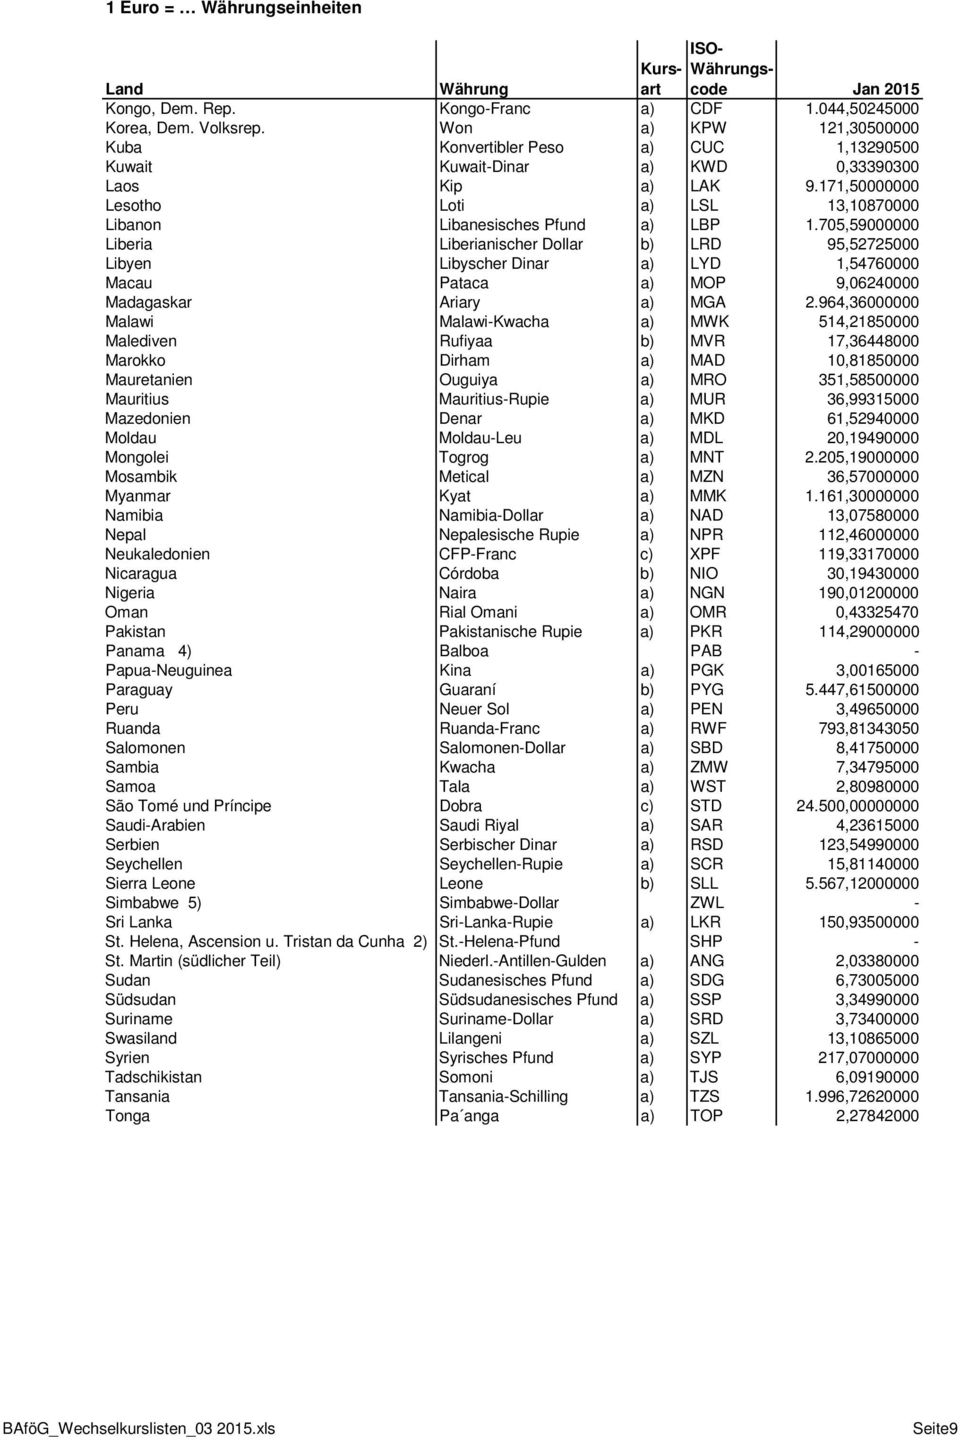 171,50000000 Lesotho Loti a) LSL 13,10870000 Libanon Libanesisches Pfund a) LBP 1.